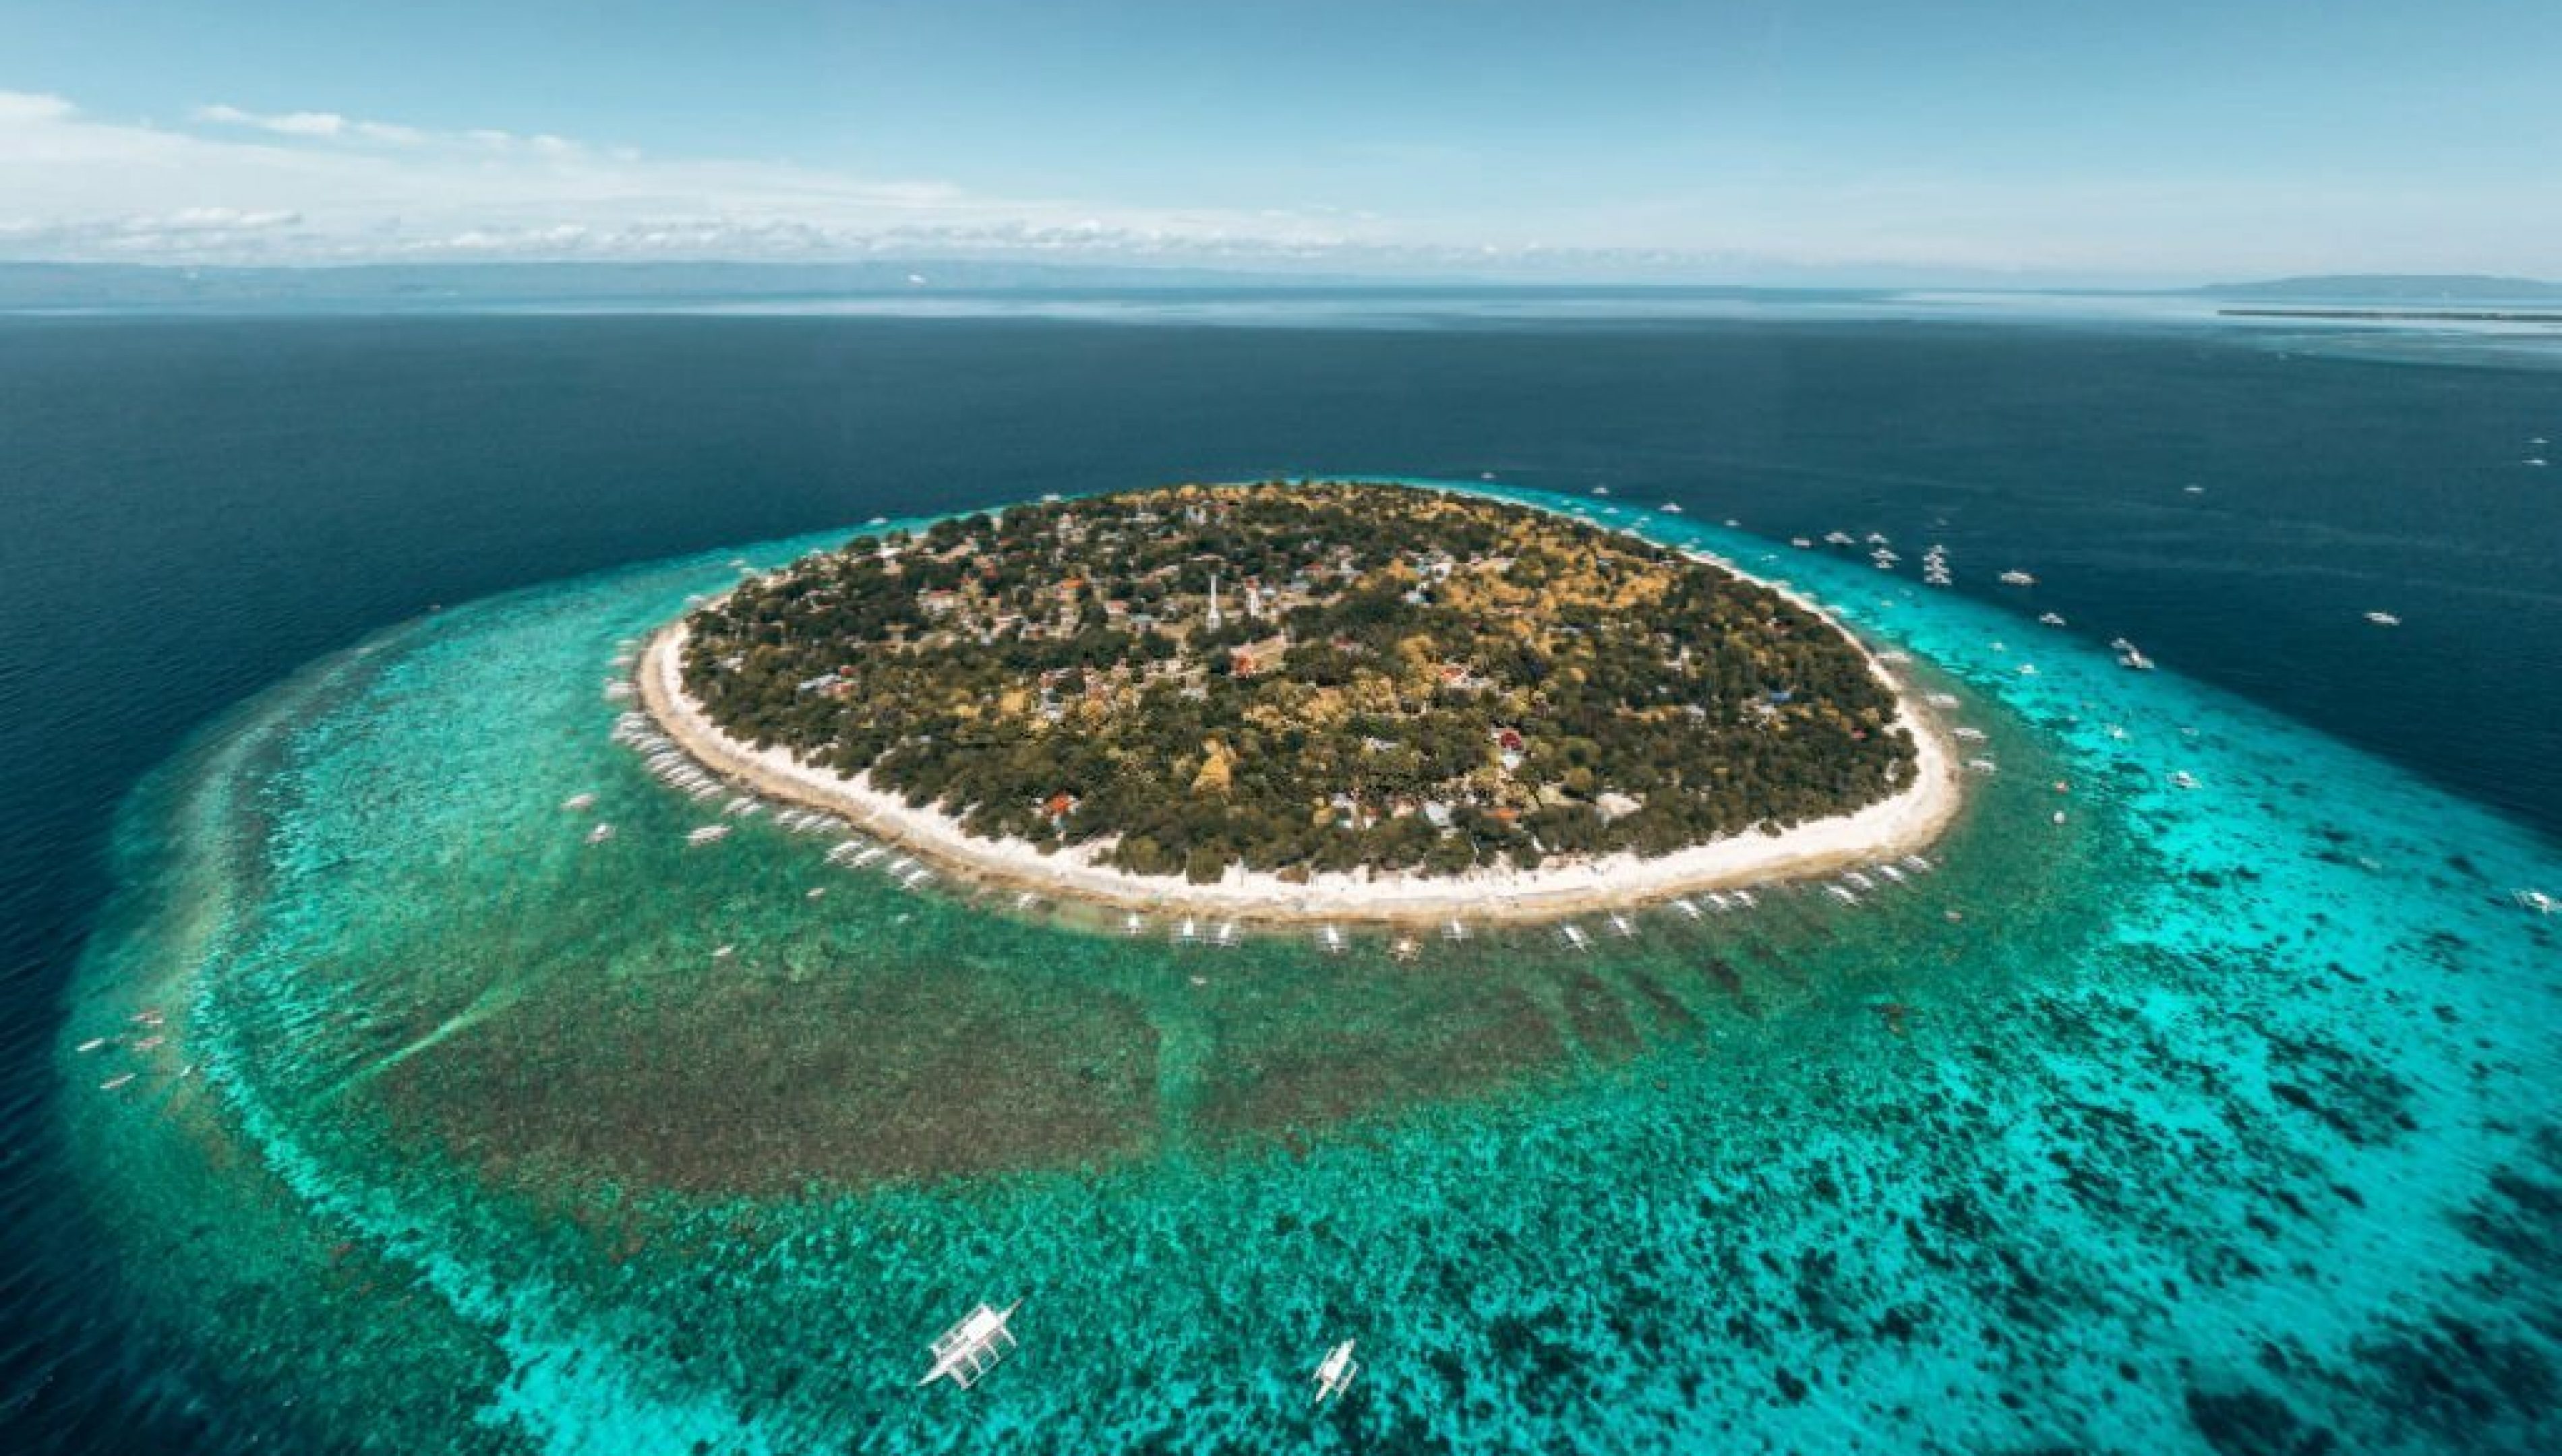 Drone photo of entire island, Bohol, Philippines